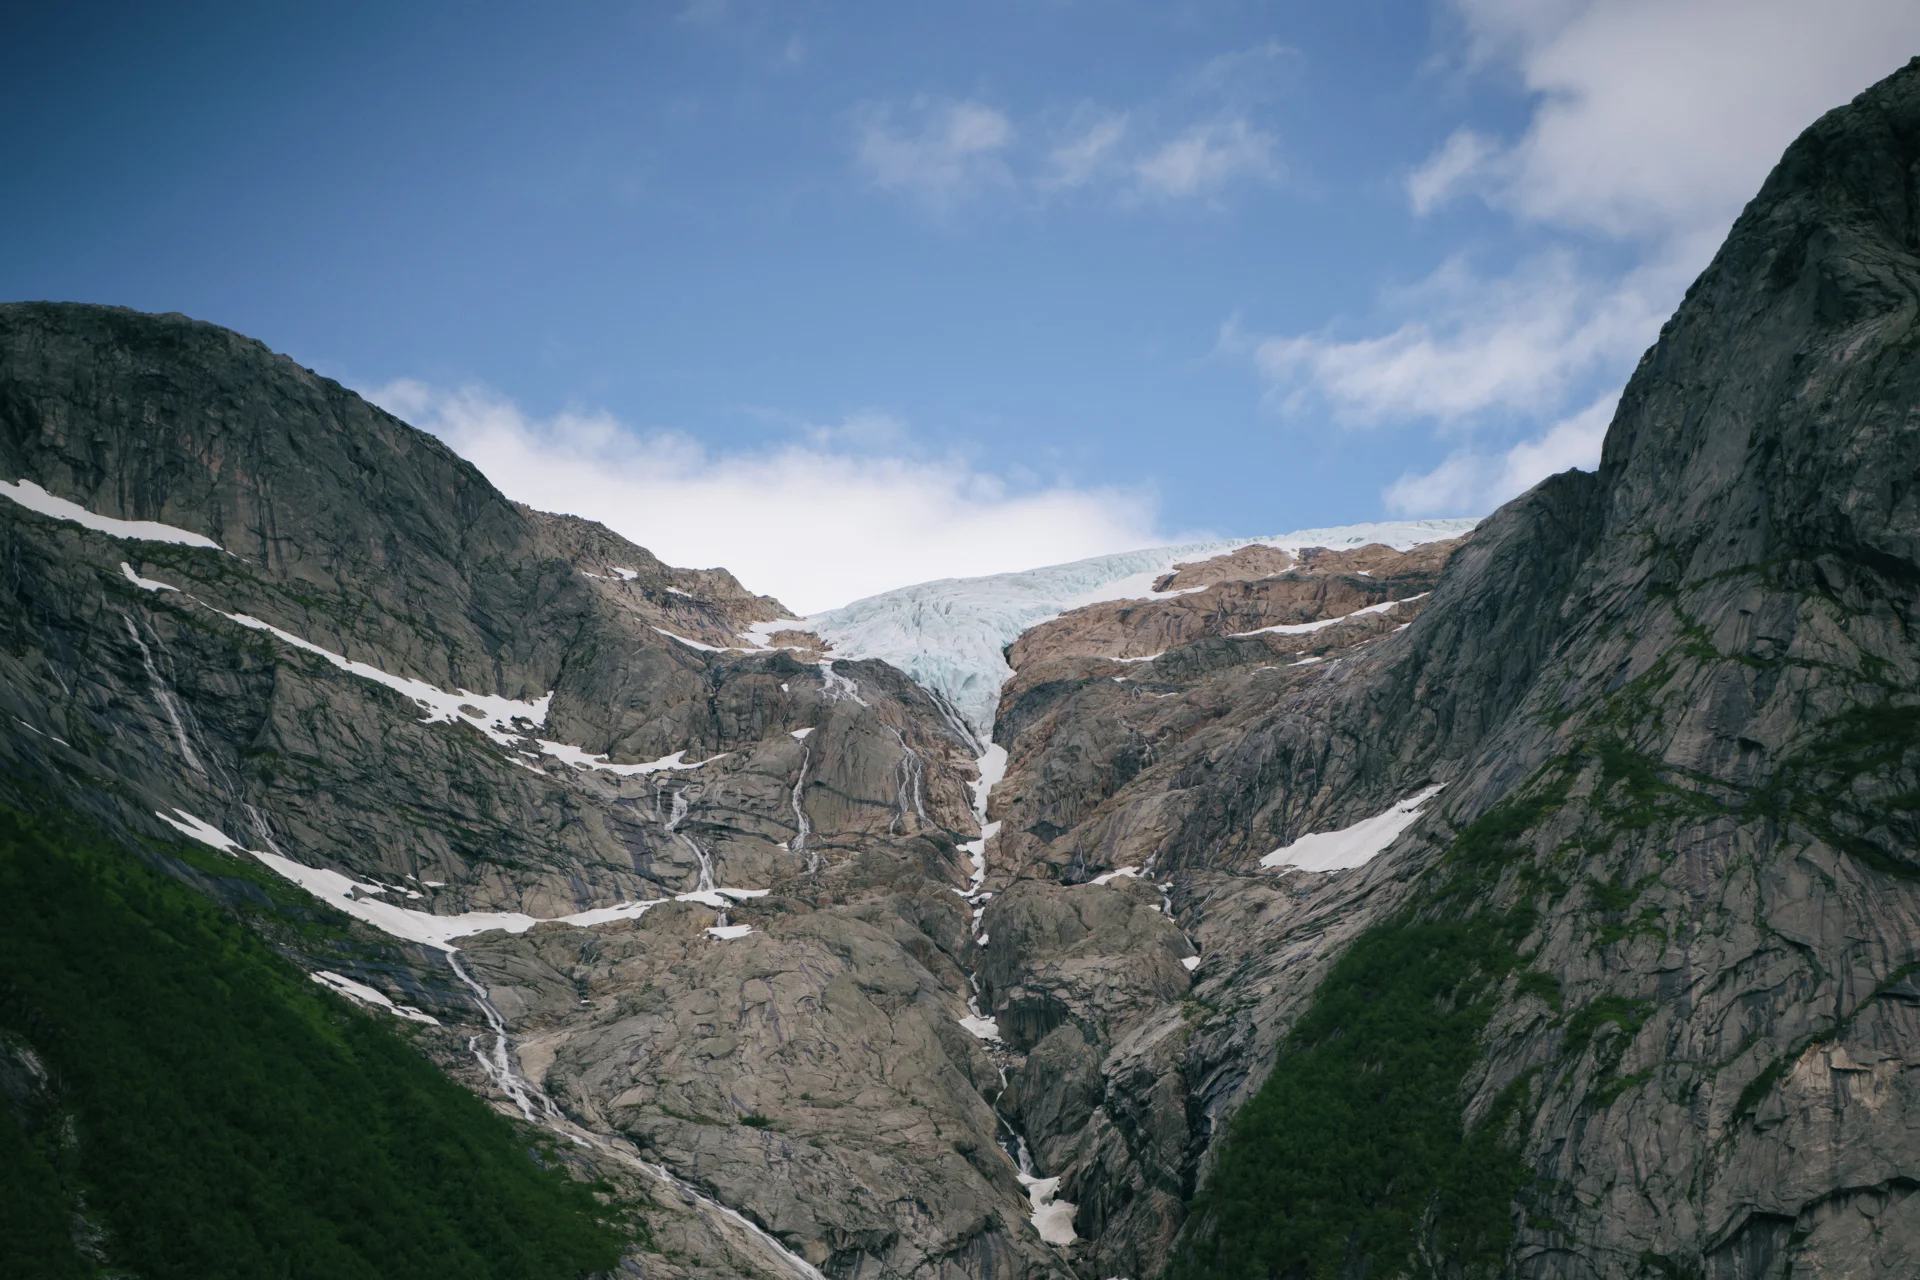 Jostedalsbreen glacier is Europe's largest glacier